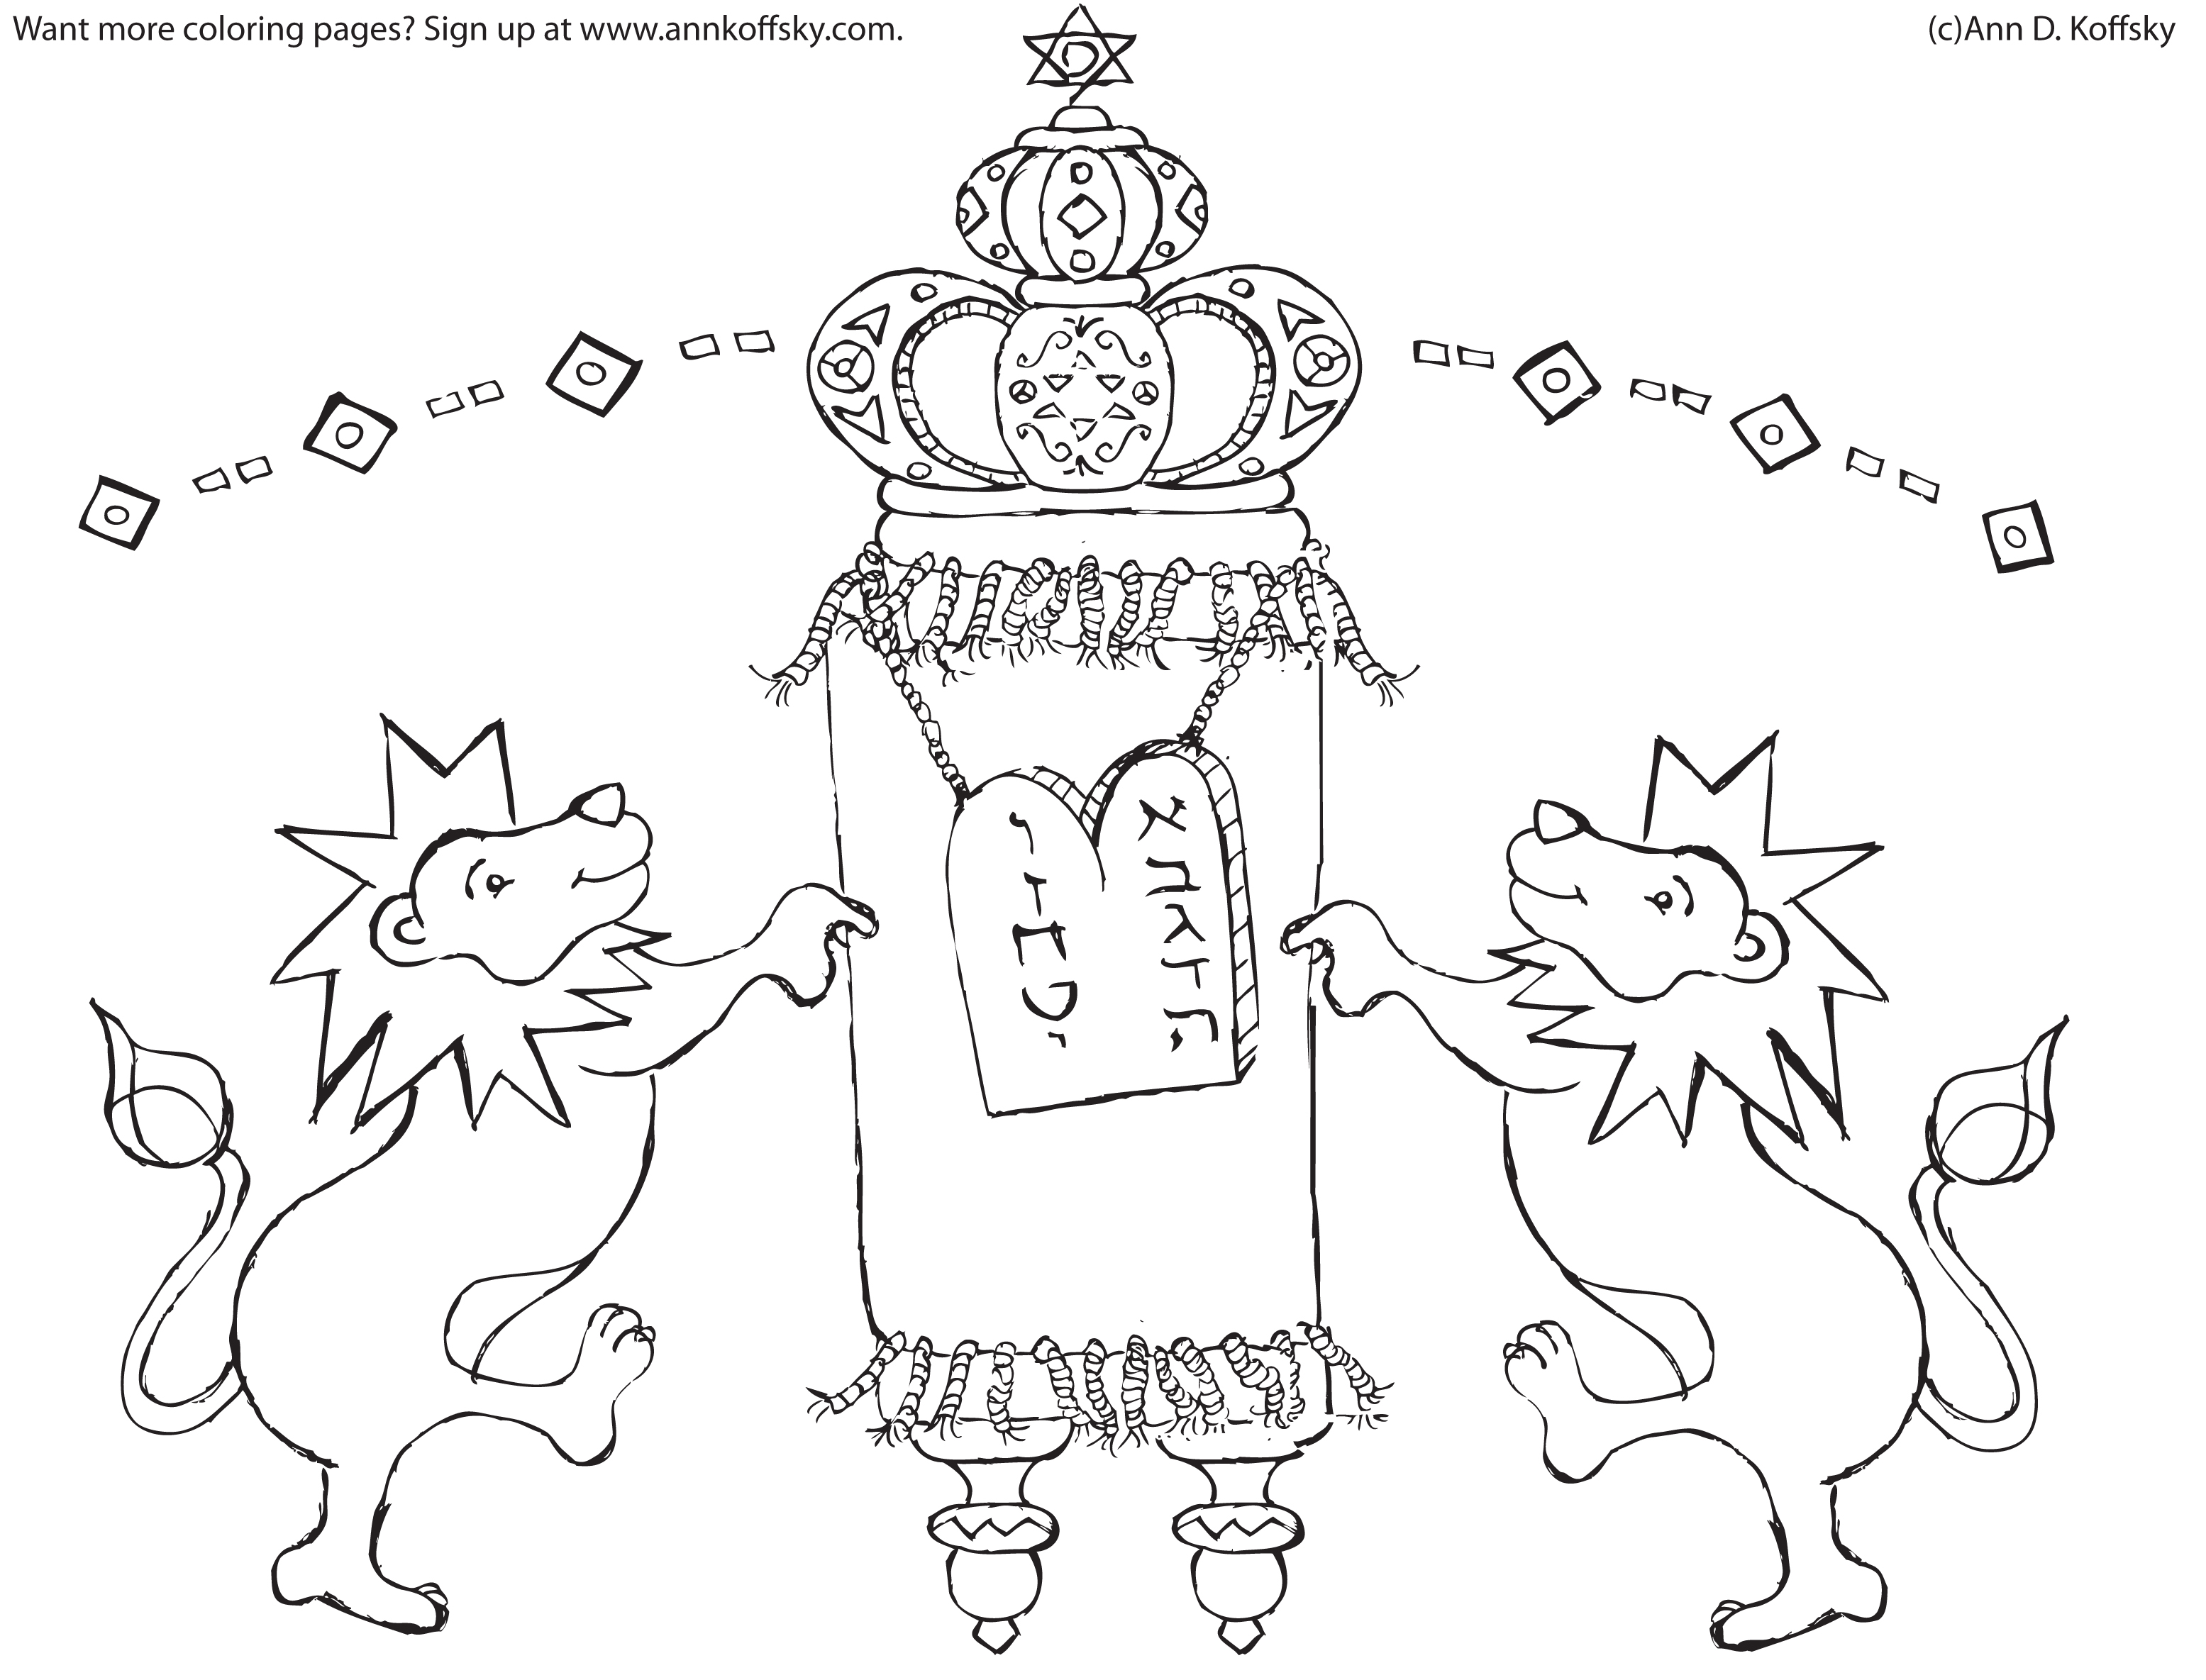 Torah lion coloring â ann d koffsky